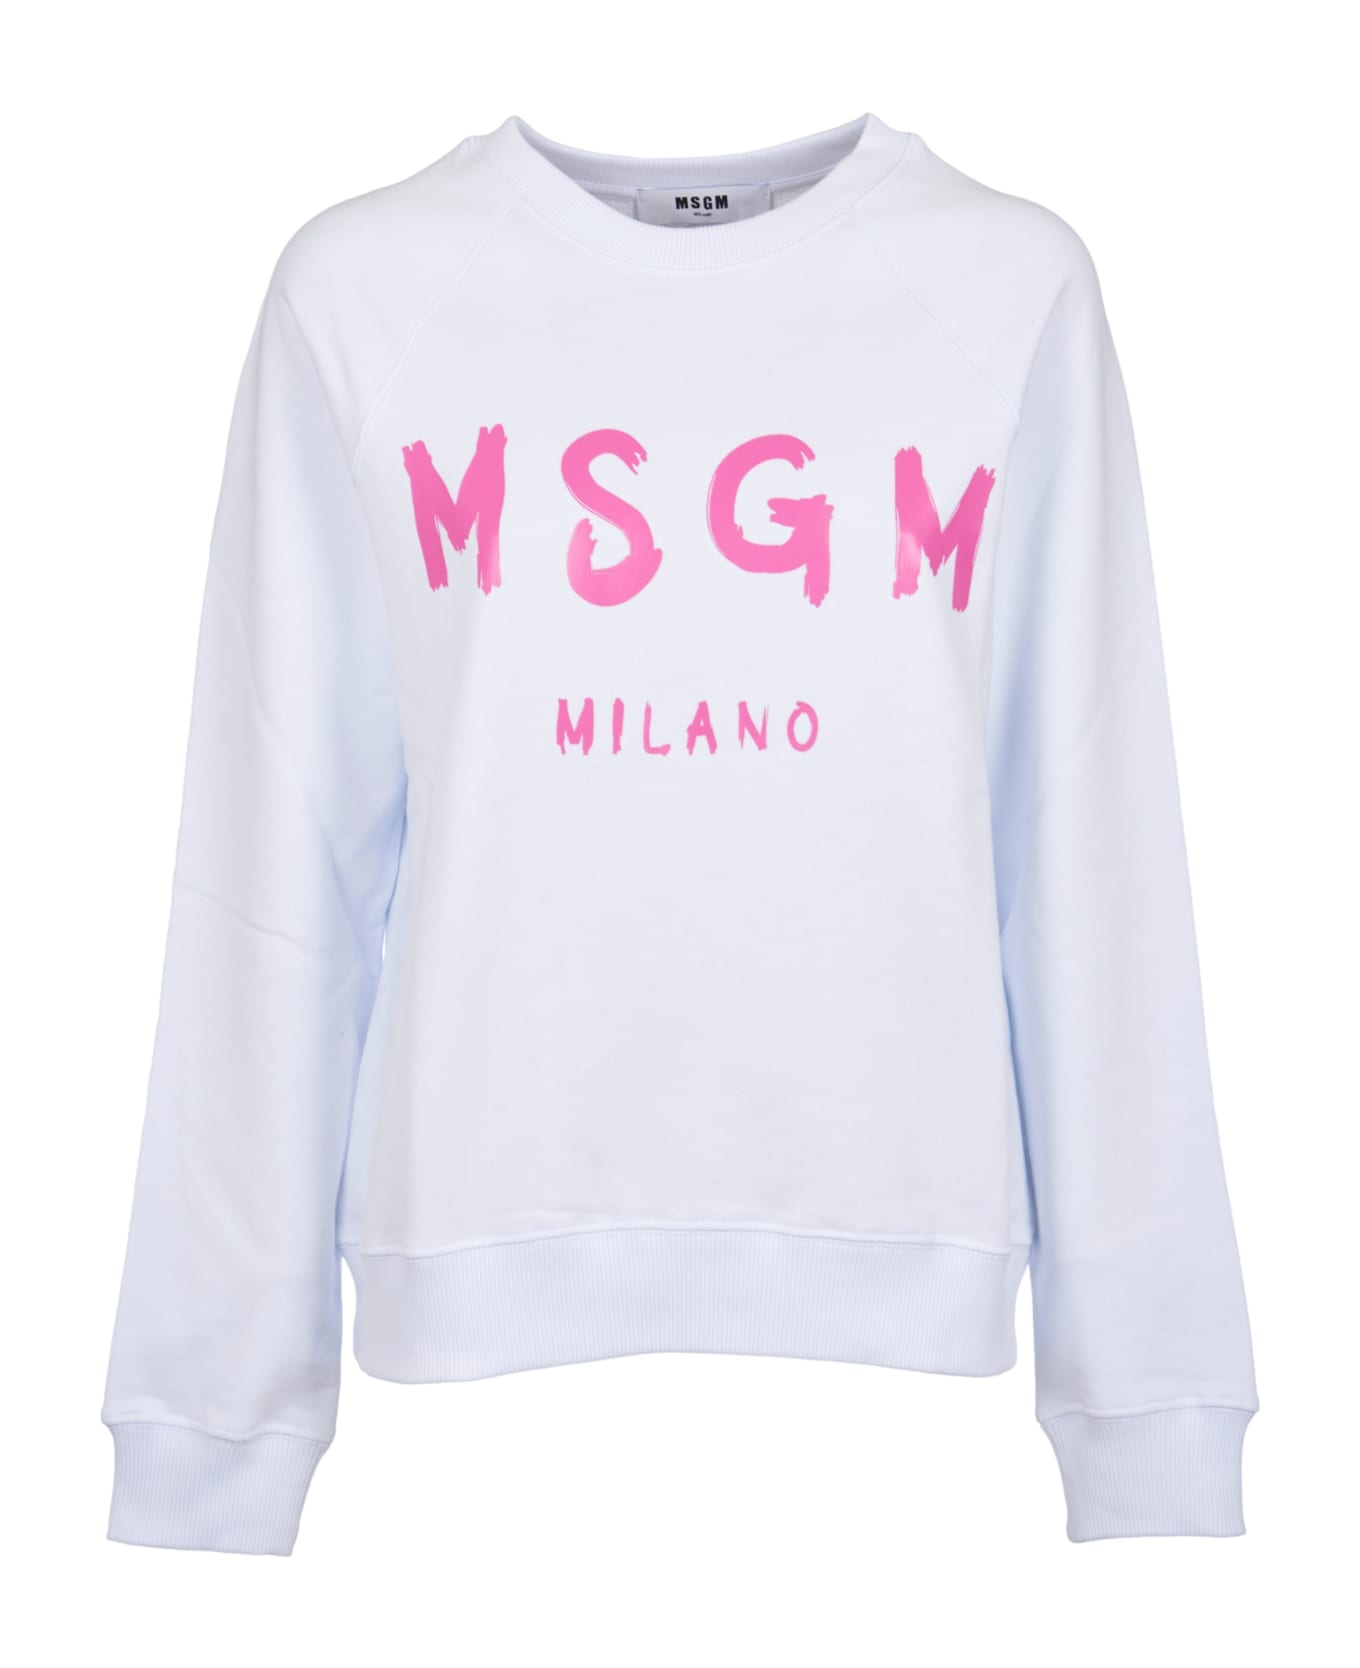 MSGM Milano Sweatshirt - Optical White フリース